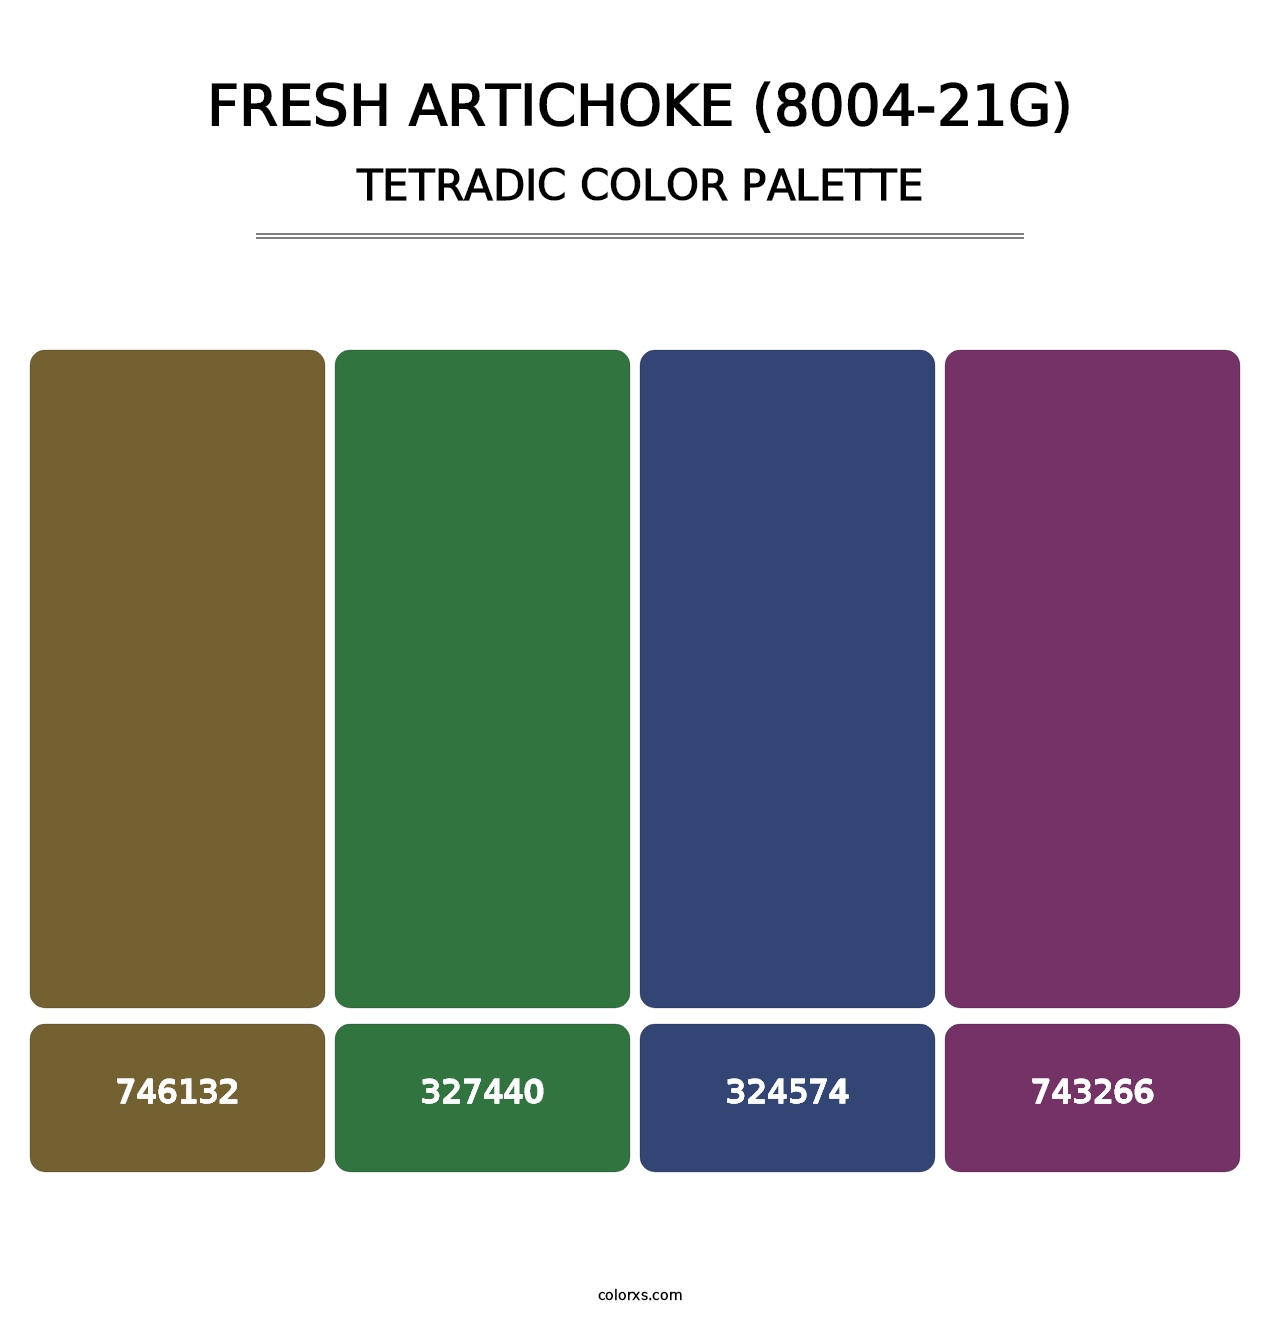 Fresh Artichoke (8004-21G) - Tetradic Color Palette